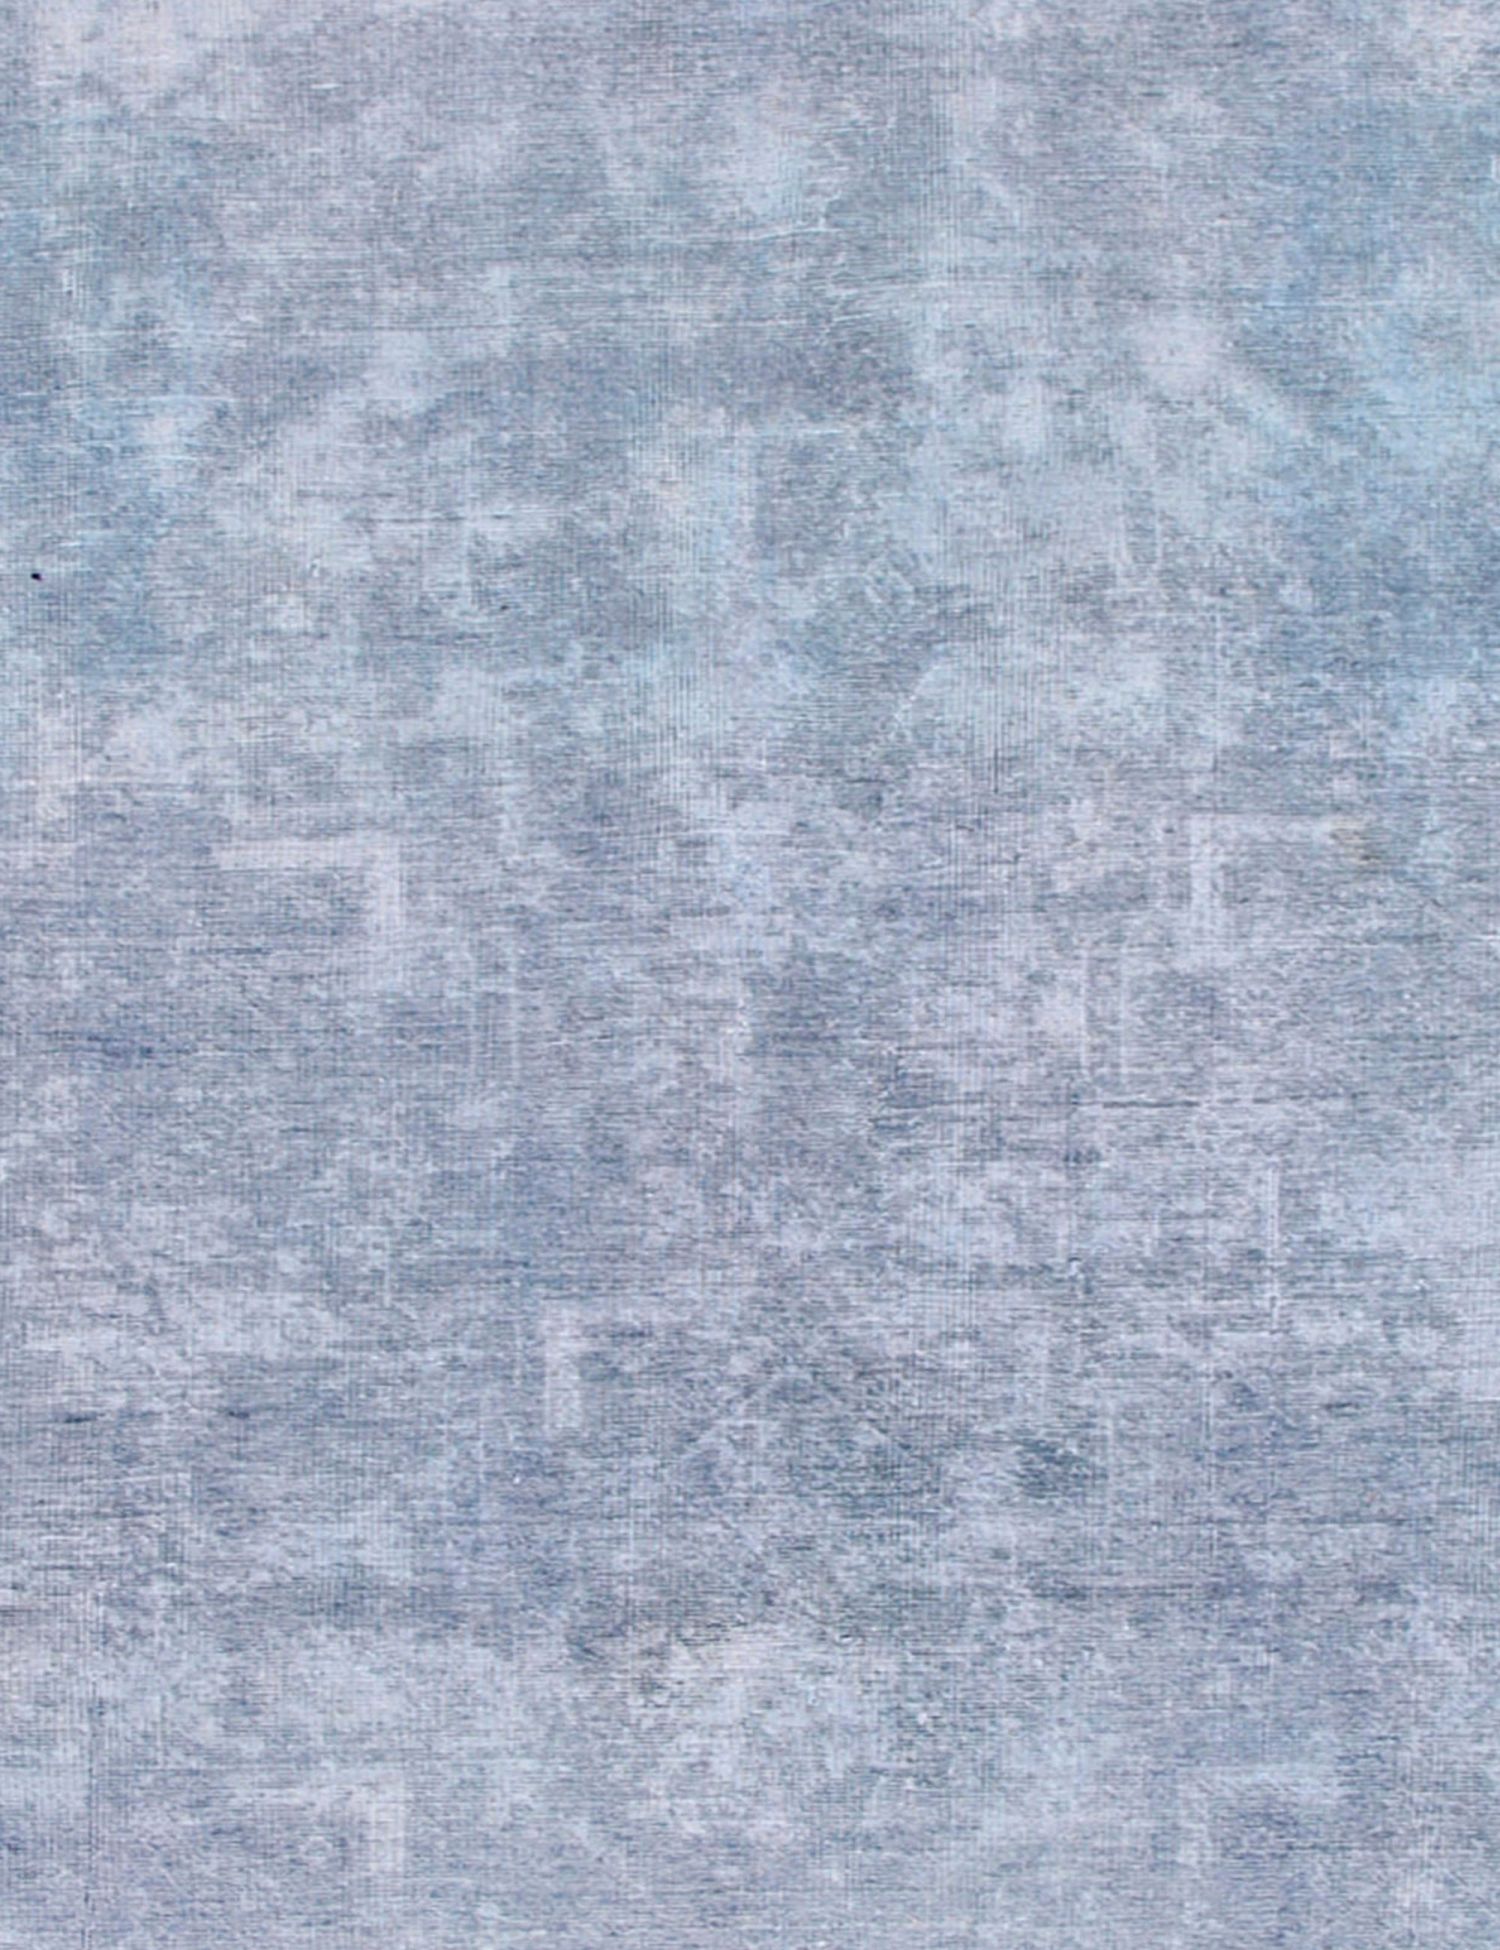 Quadrat  vintage teppich  blau <br/>194 x 194 cm